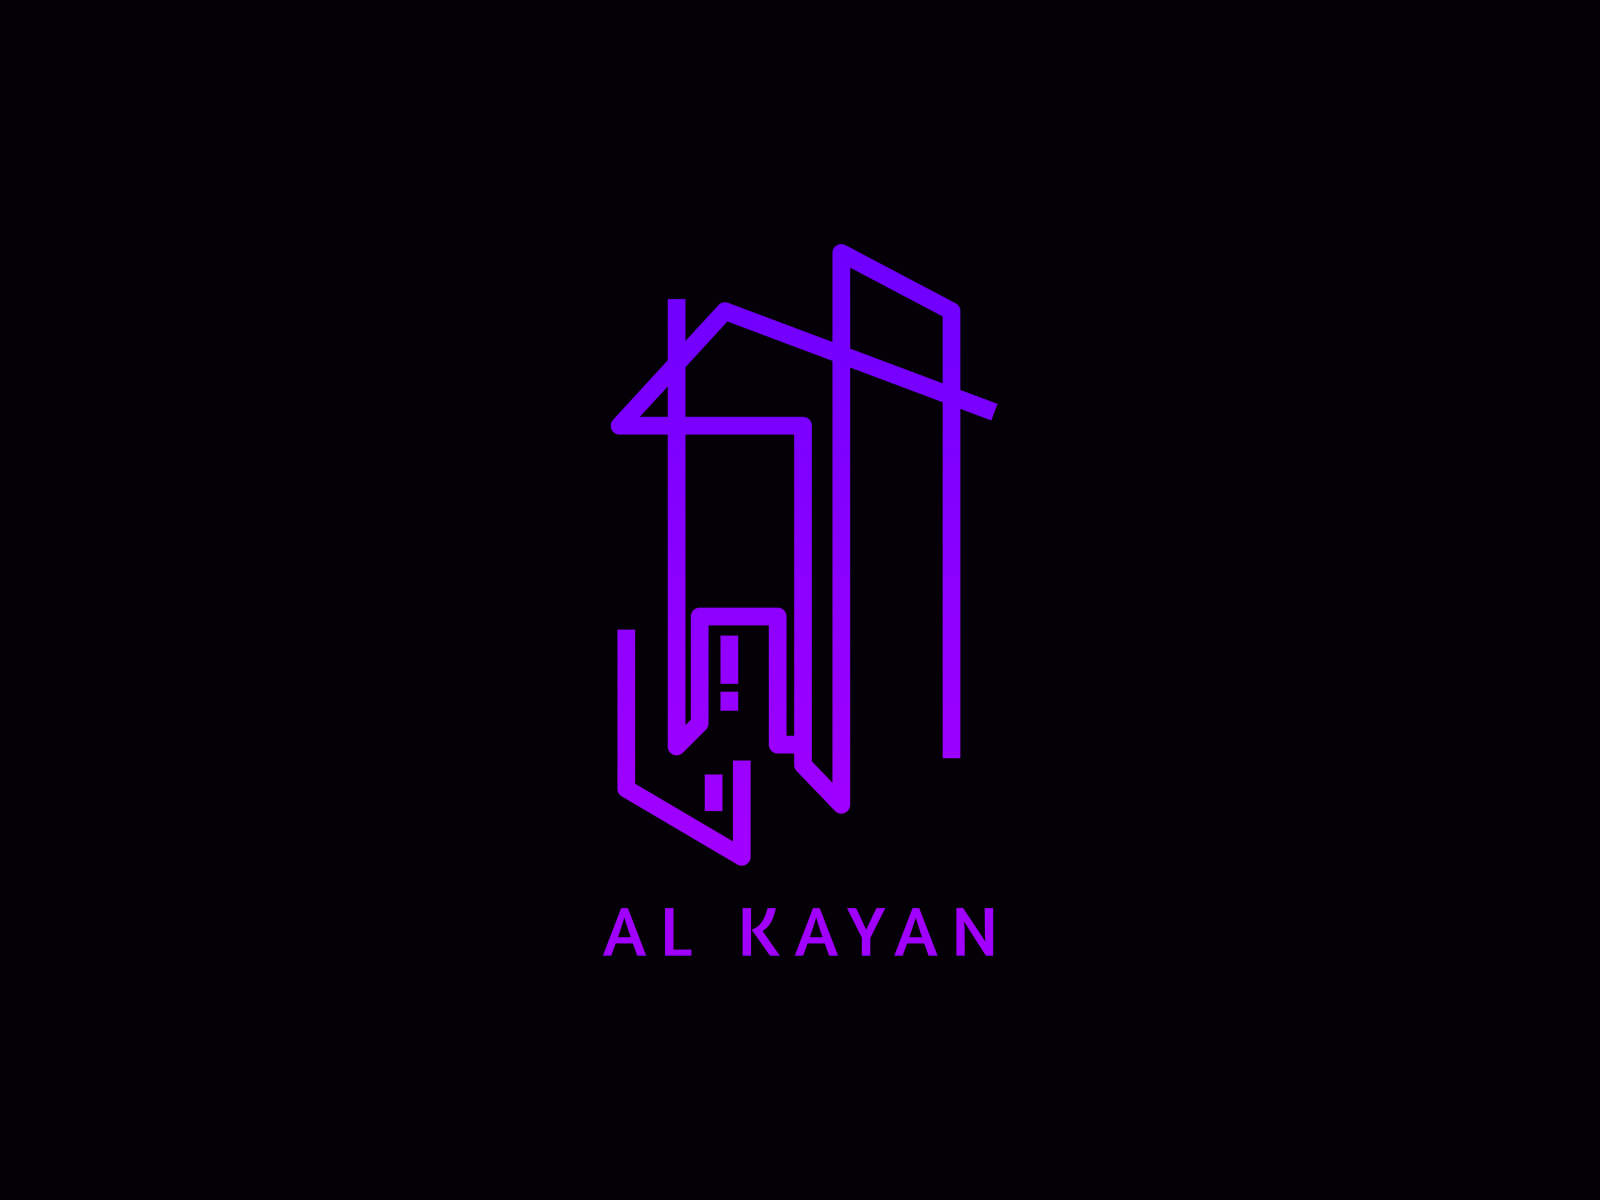 Ayan Bag Logo, Professional logo design by Anilo Design on Dribbble